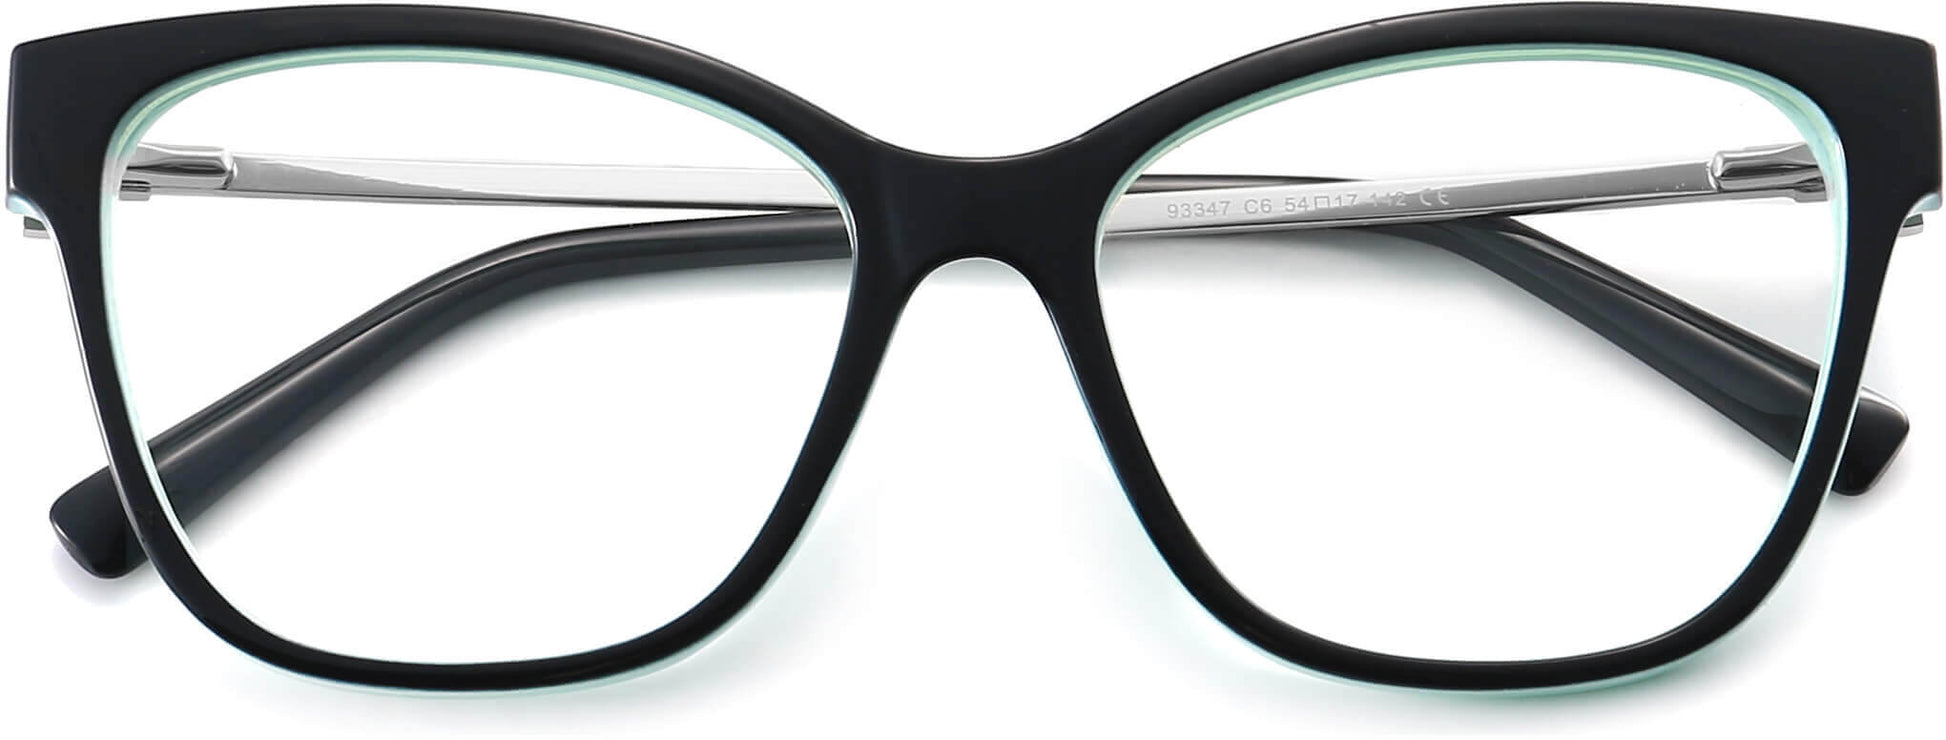 Carmella Cateye Black Eyeglasses from ANRRI, closed view